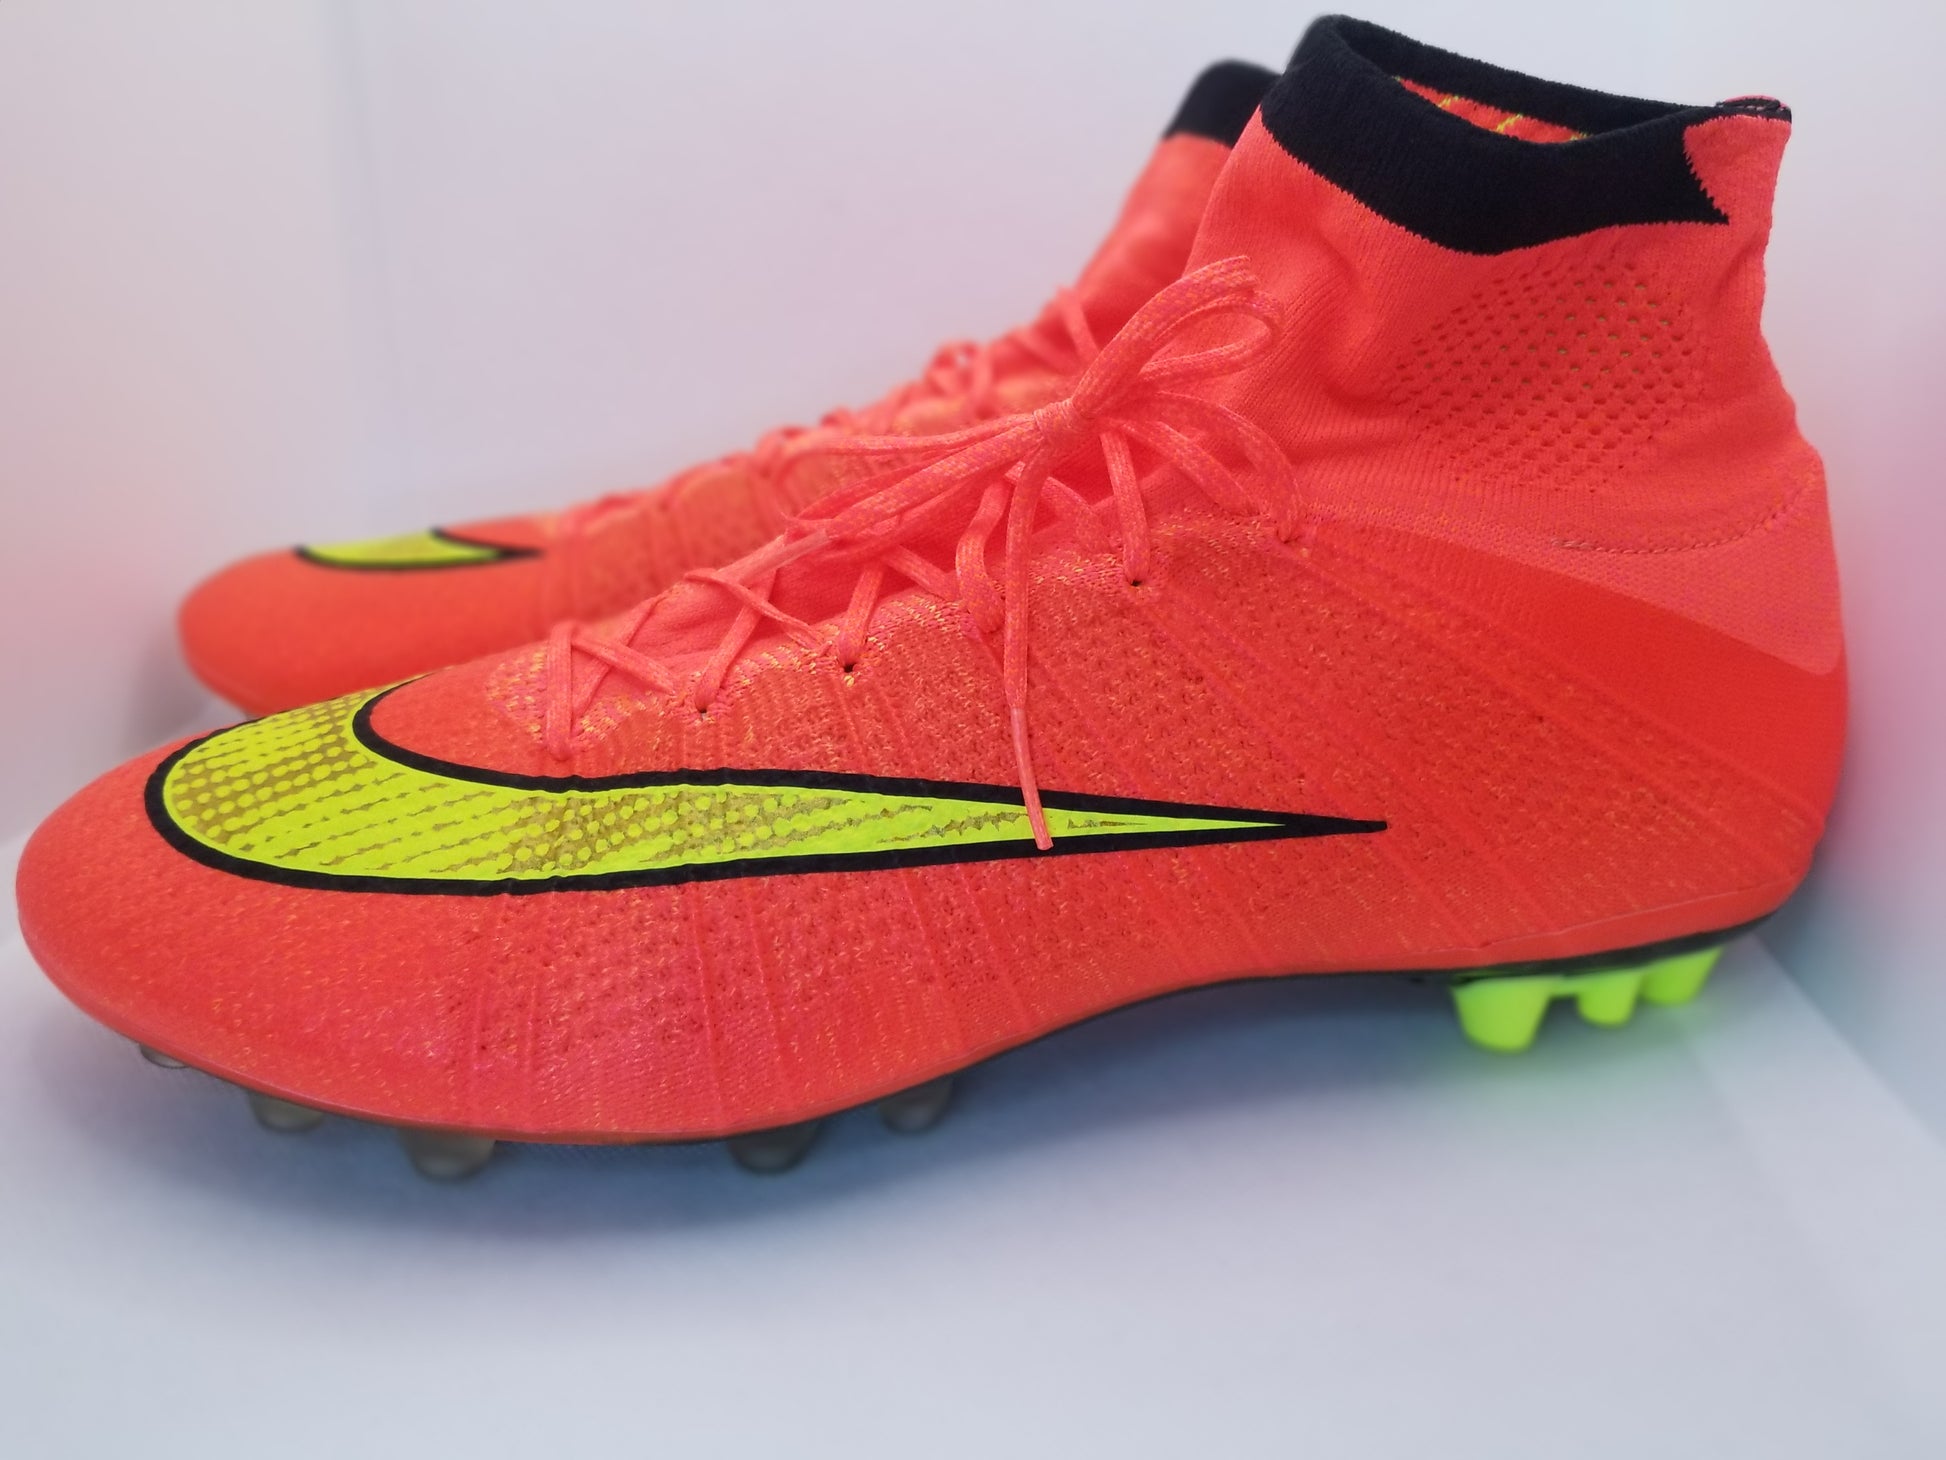 Nike AG – Nyong Boots